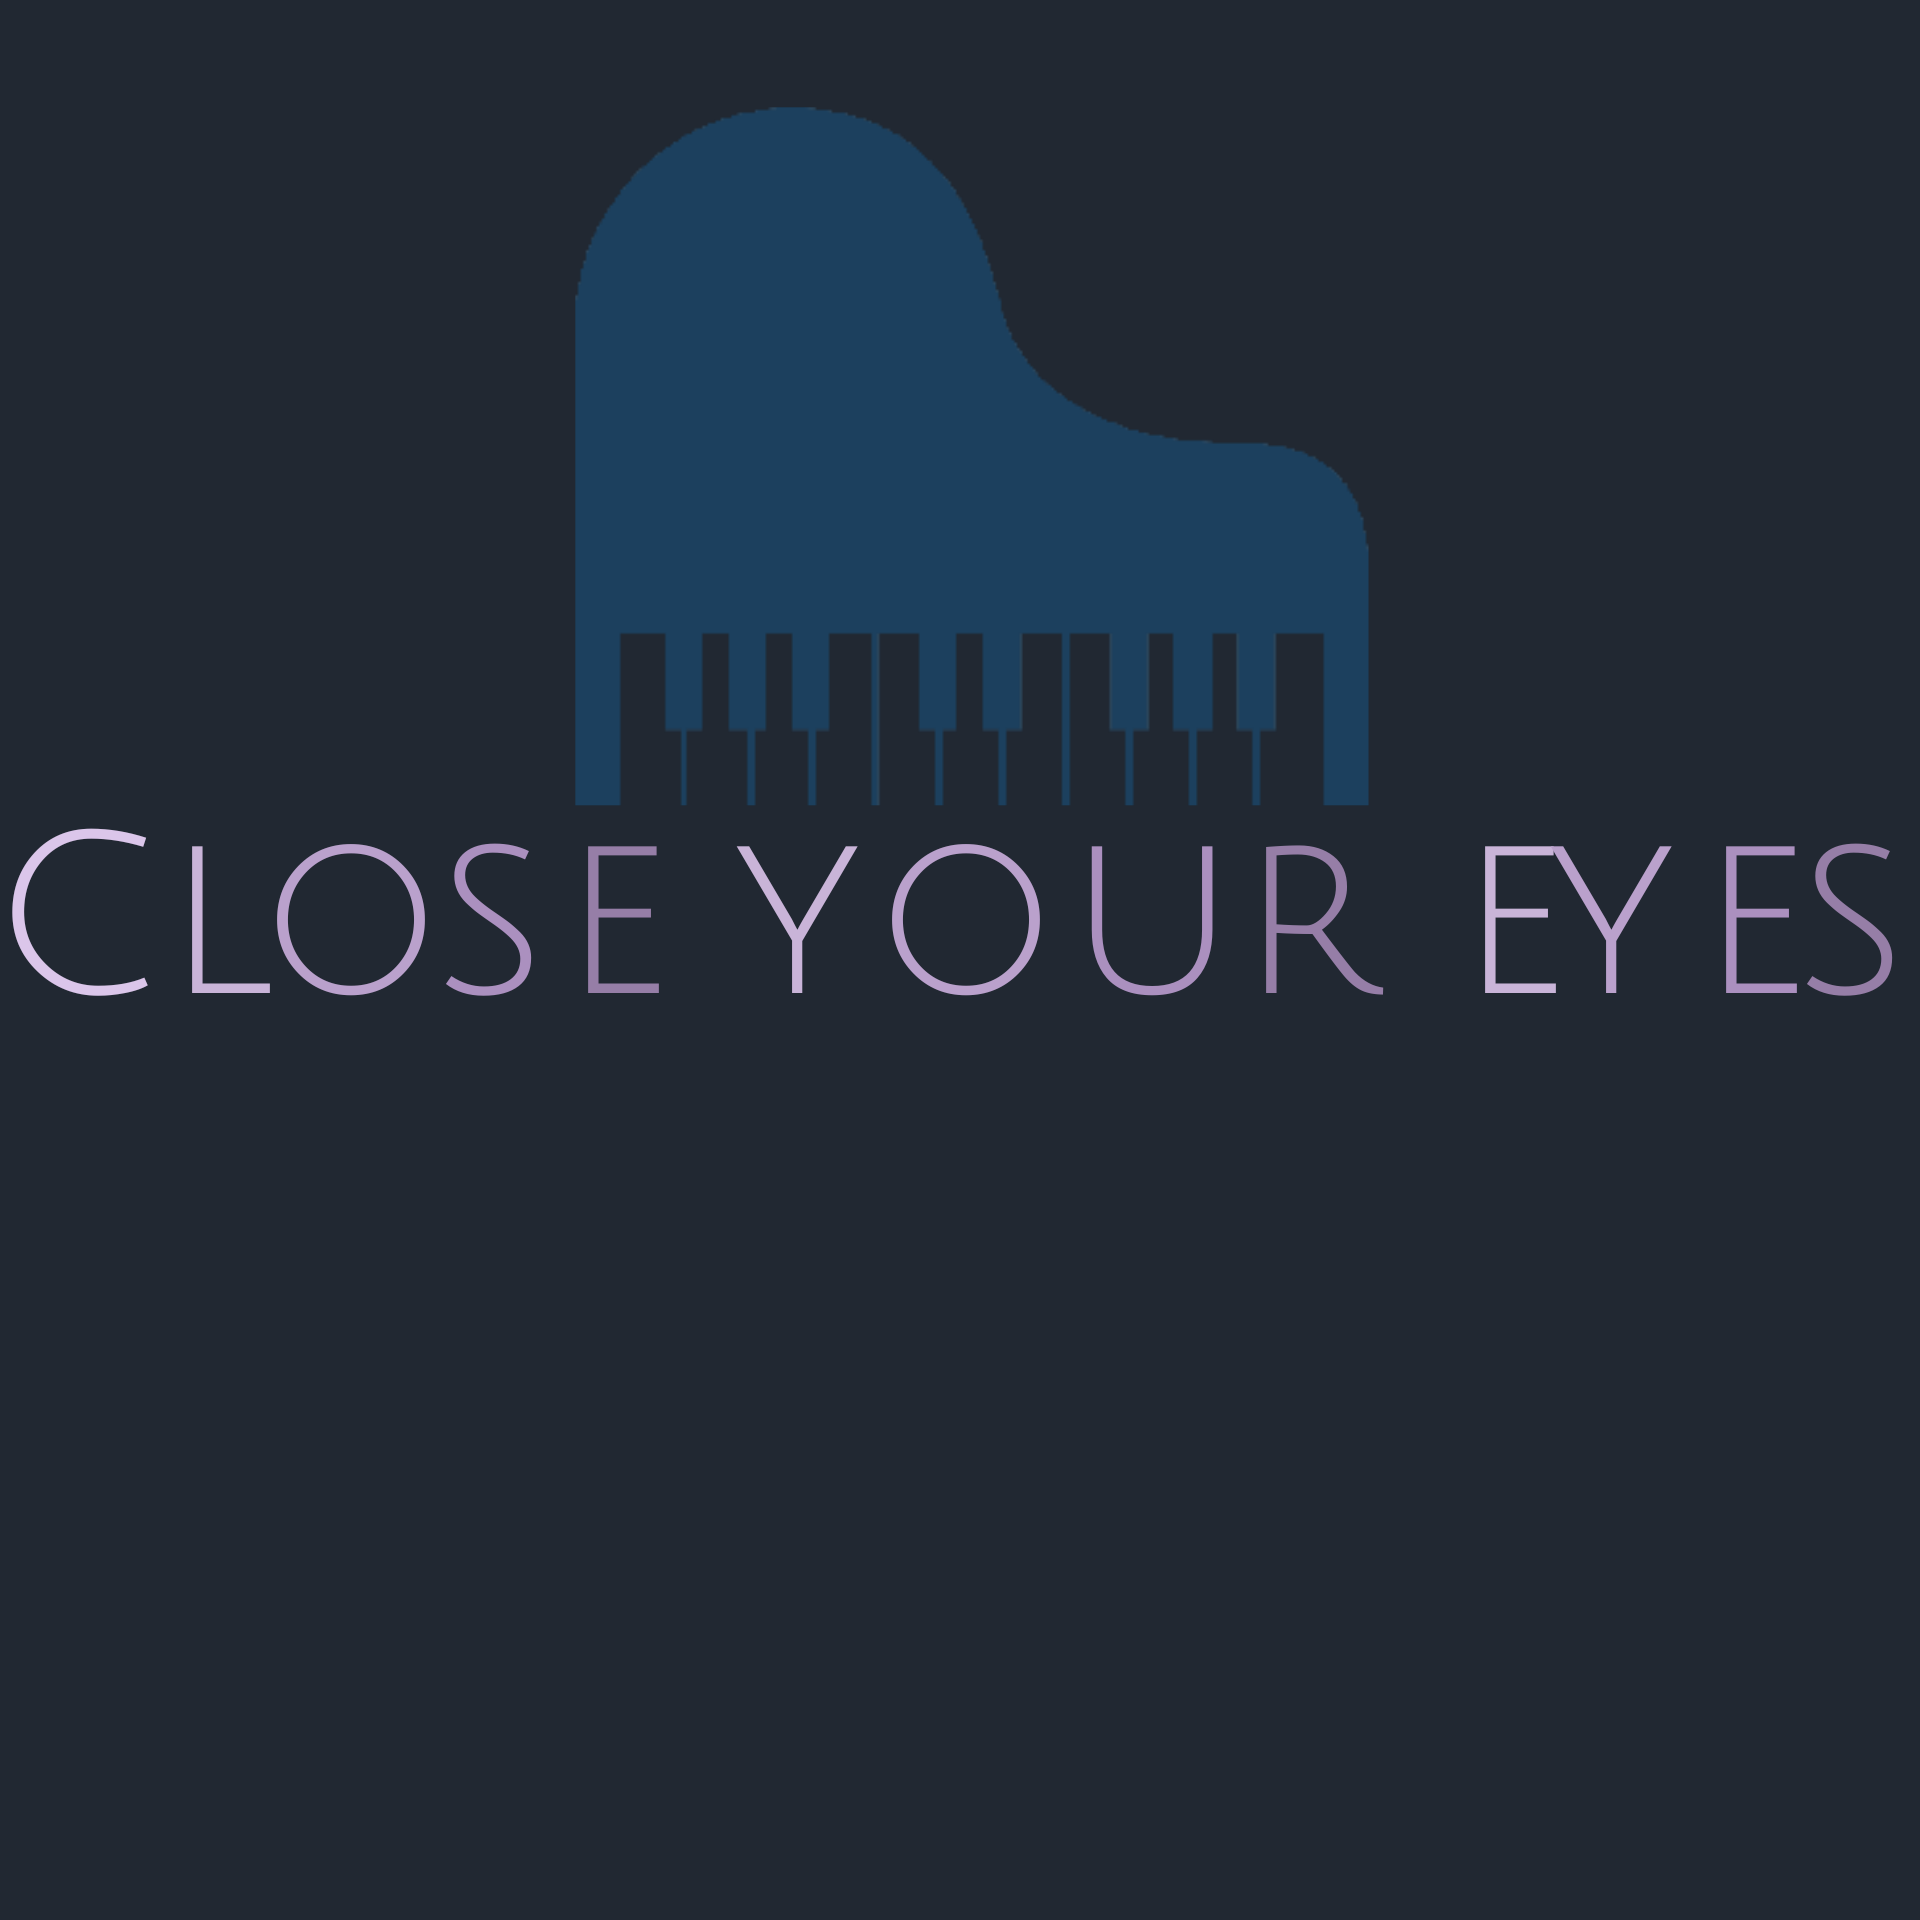 Close your eyes Image